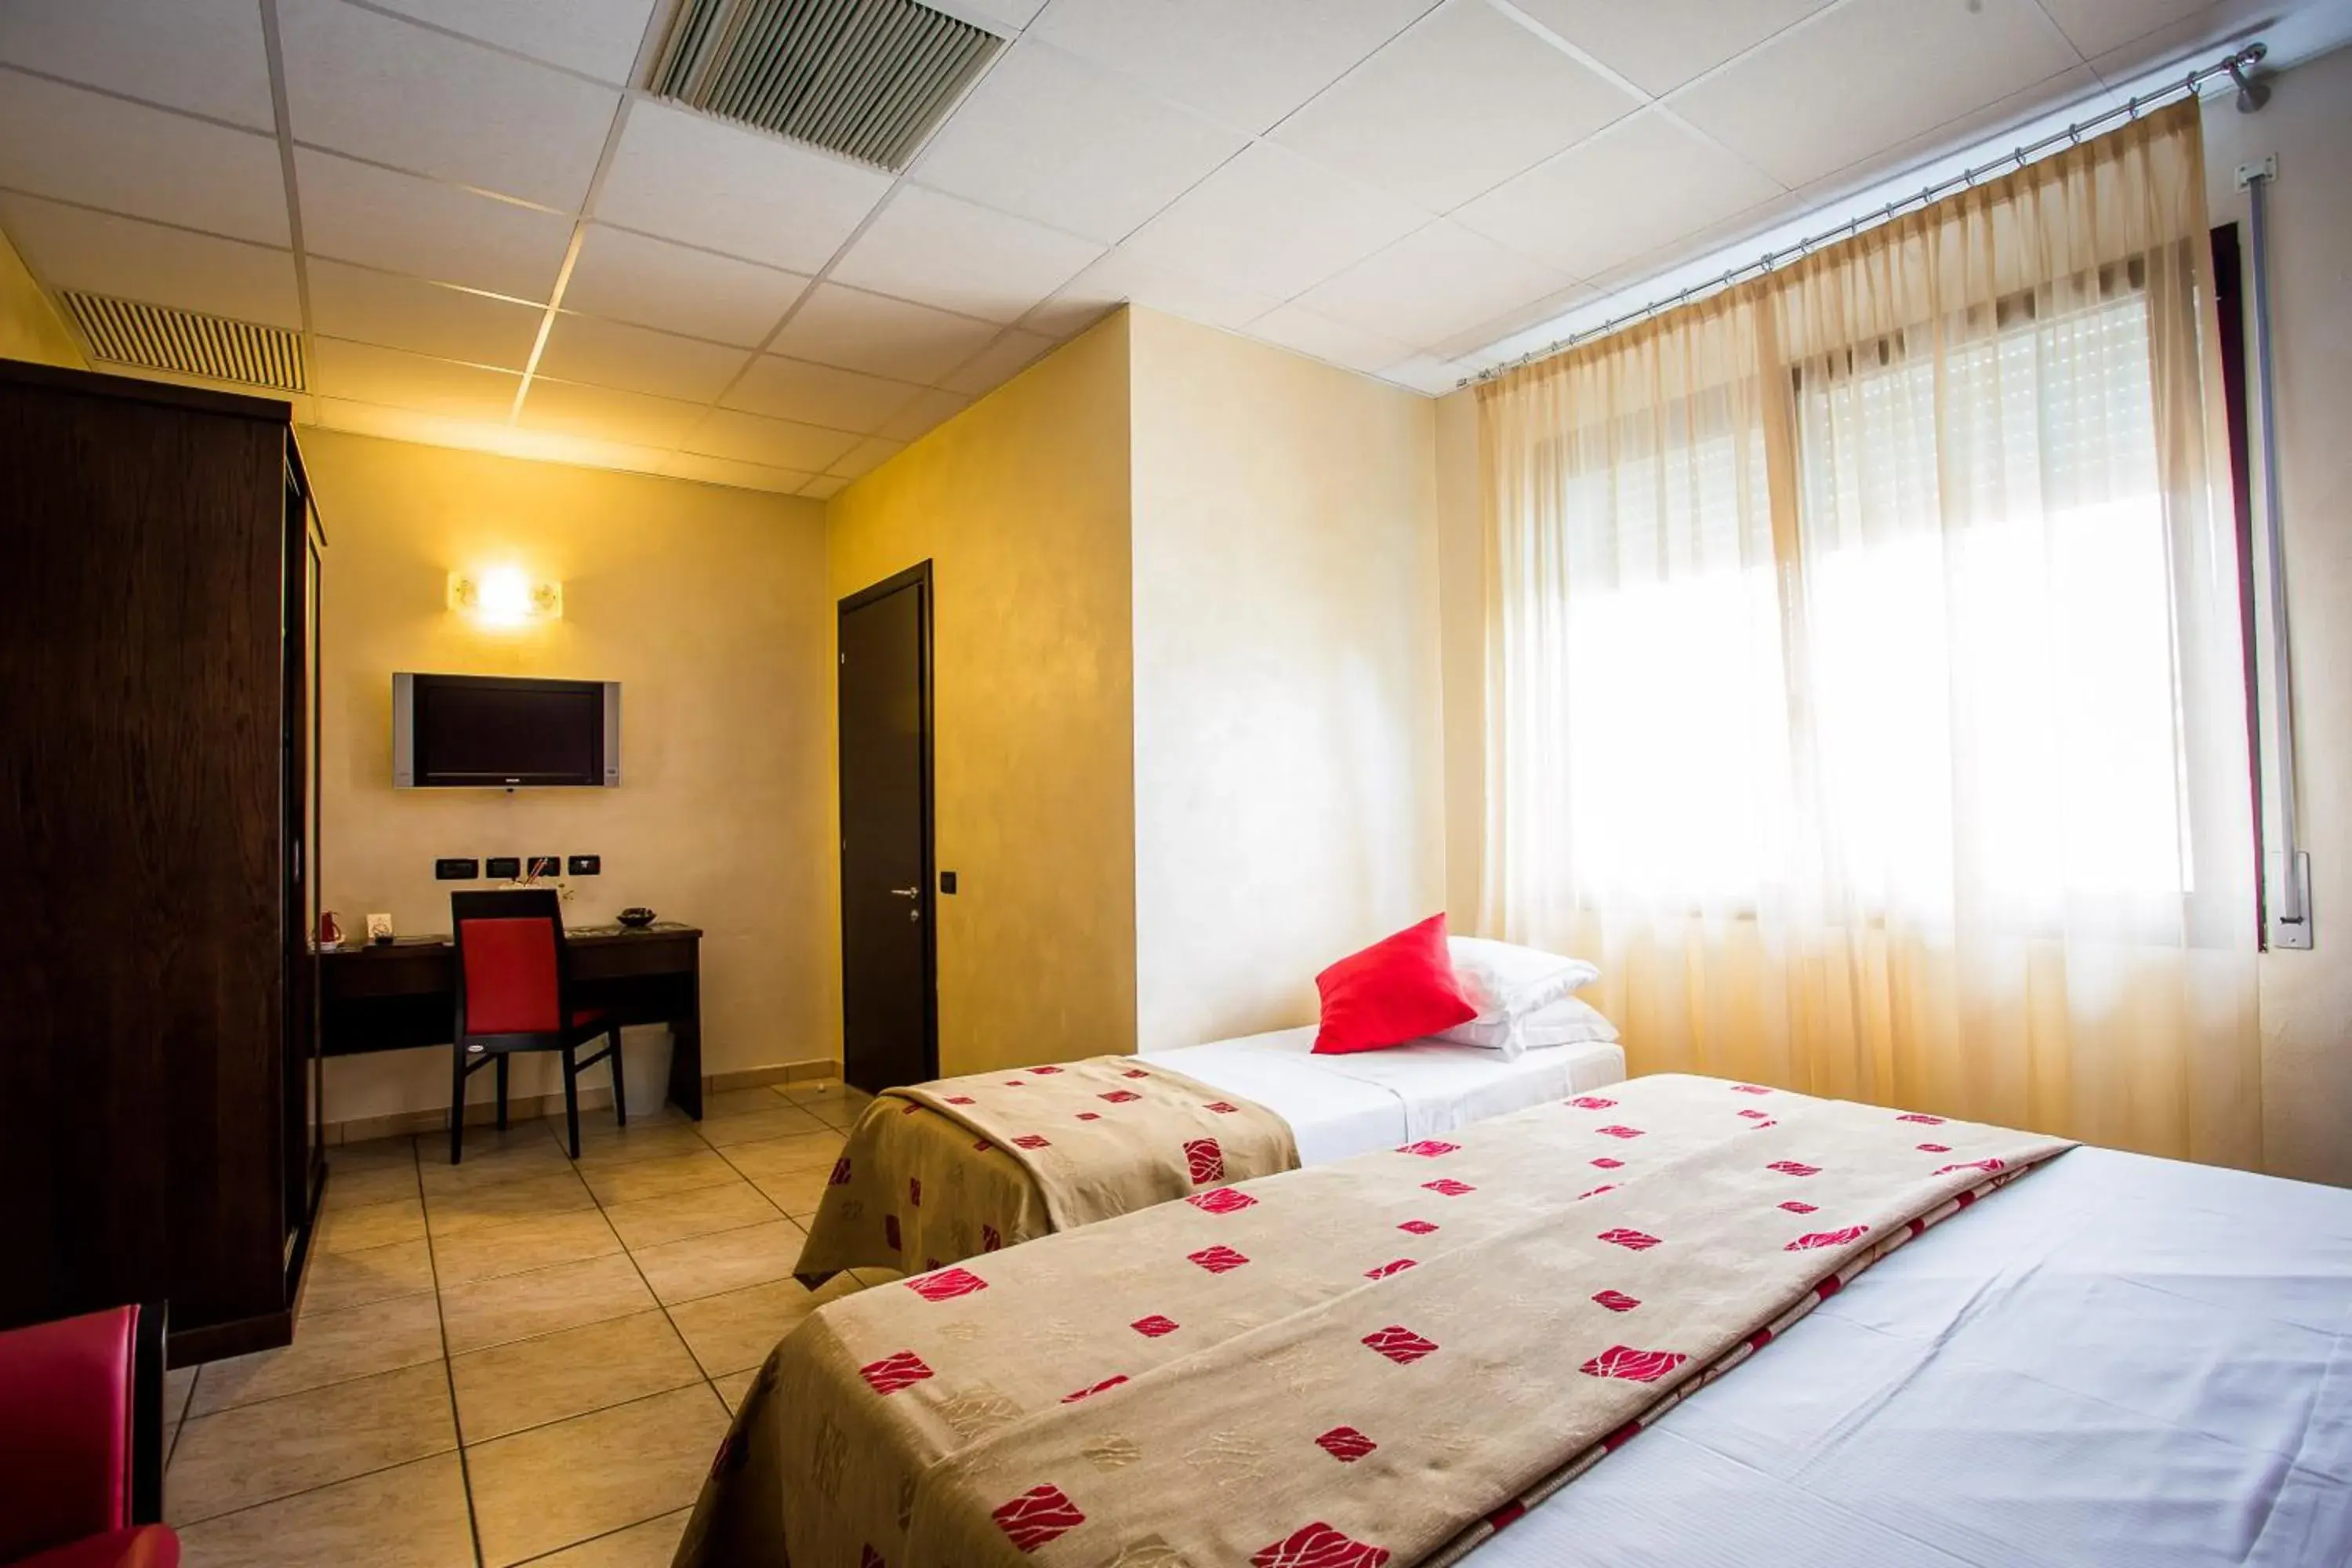 Bed, Room Photo in Piccolo Hotel Nogara